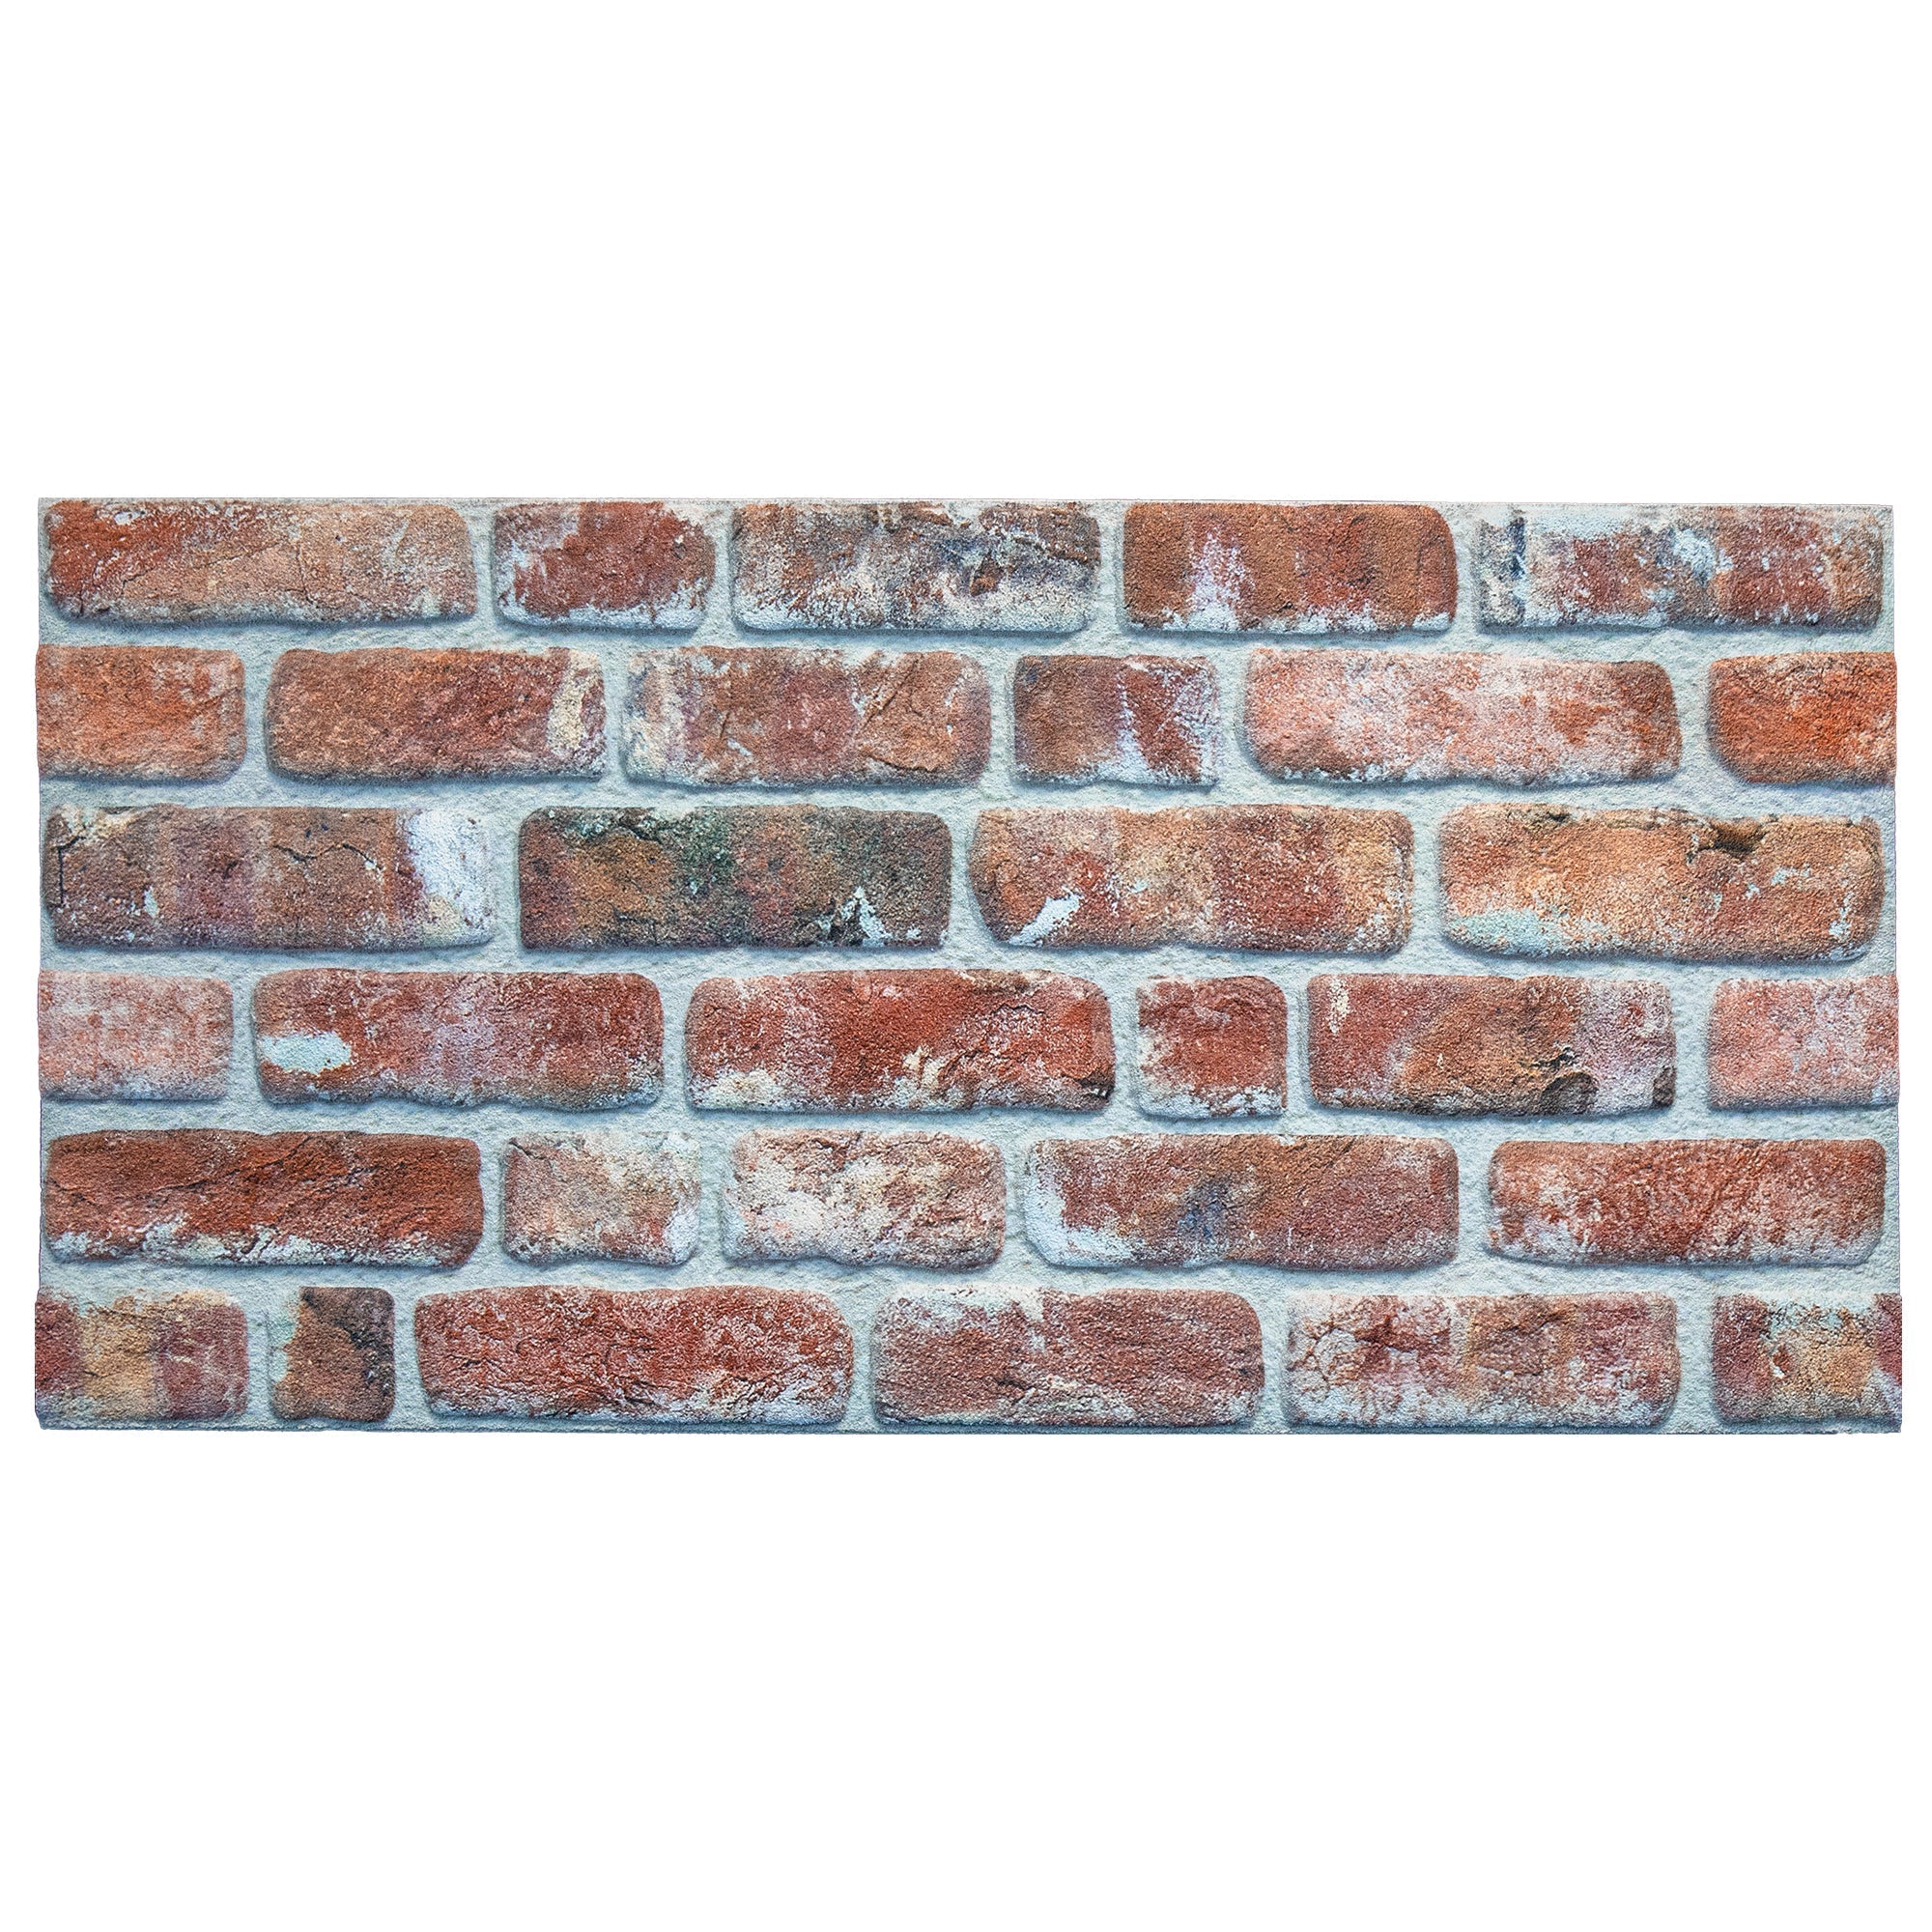 Stone Bridge L-1902 Brick Wall Panels - izodekor3D Wall PanelL-1902868256047111Stone Bridge L-1902 Brick Wall Panels